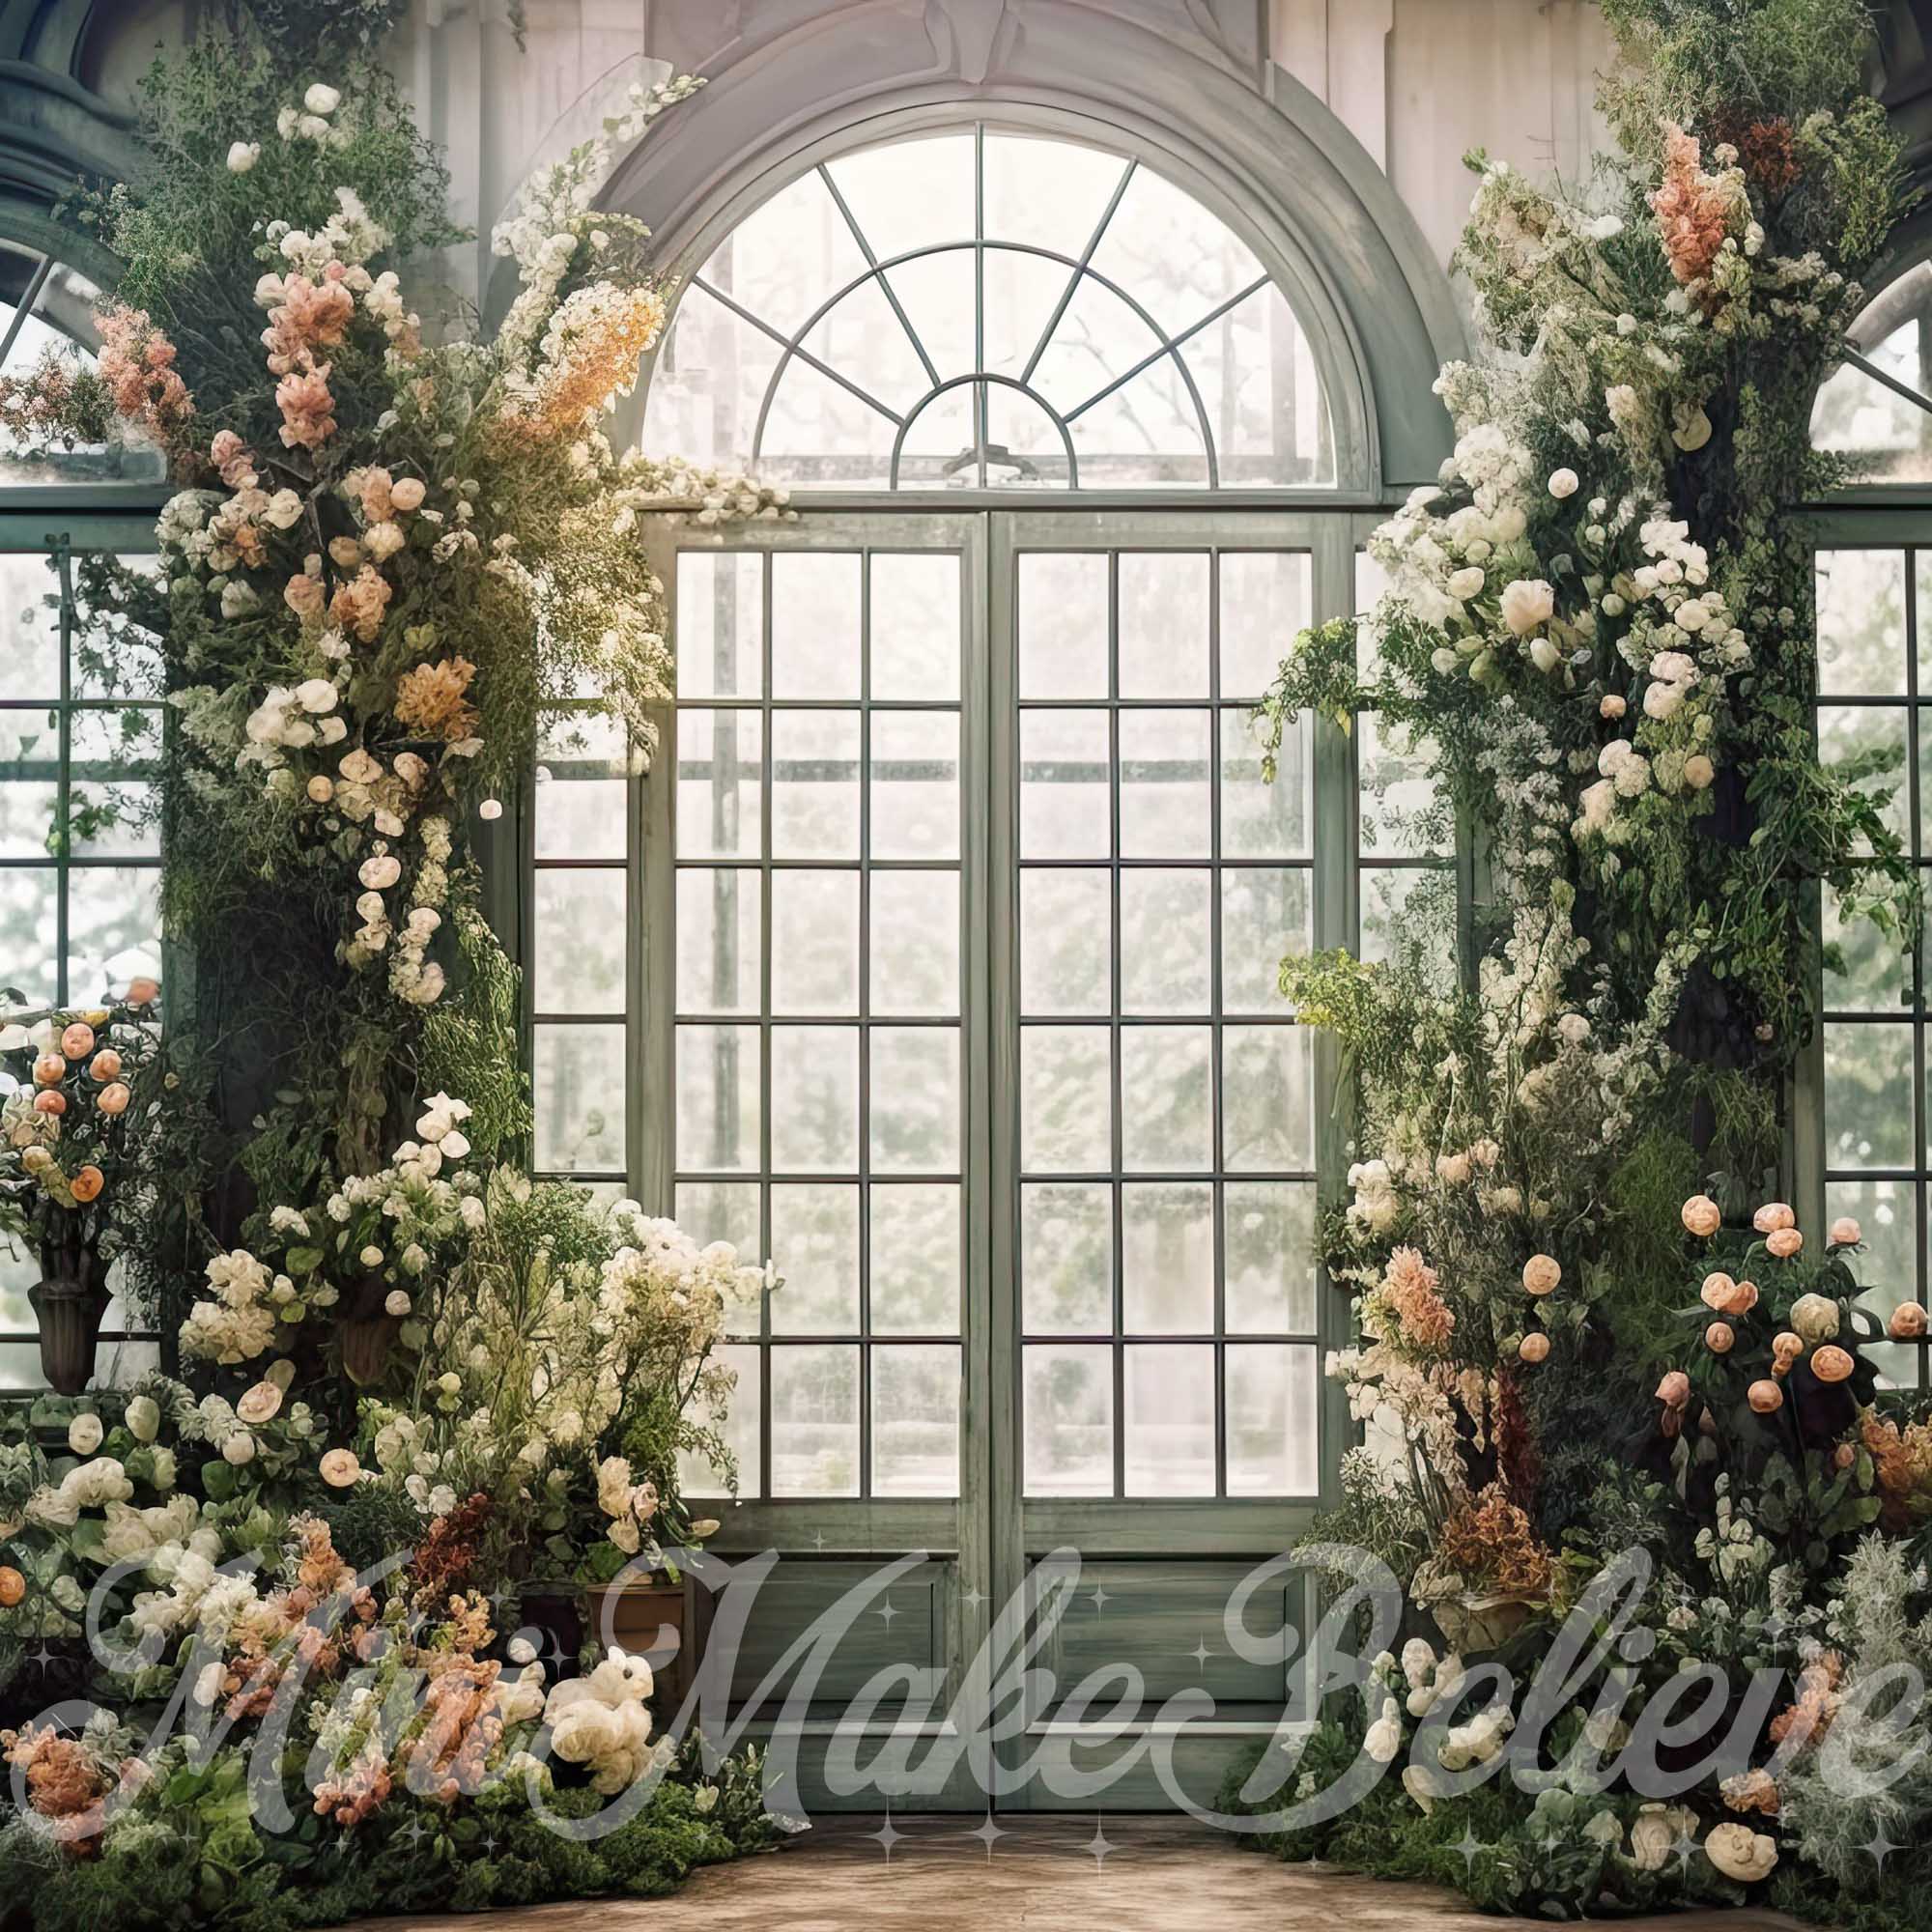 Kate Valentine Spring Window Flower Backdrop Designed by Mini MakeBelieve